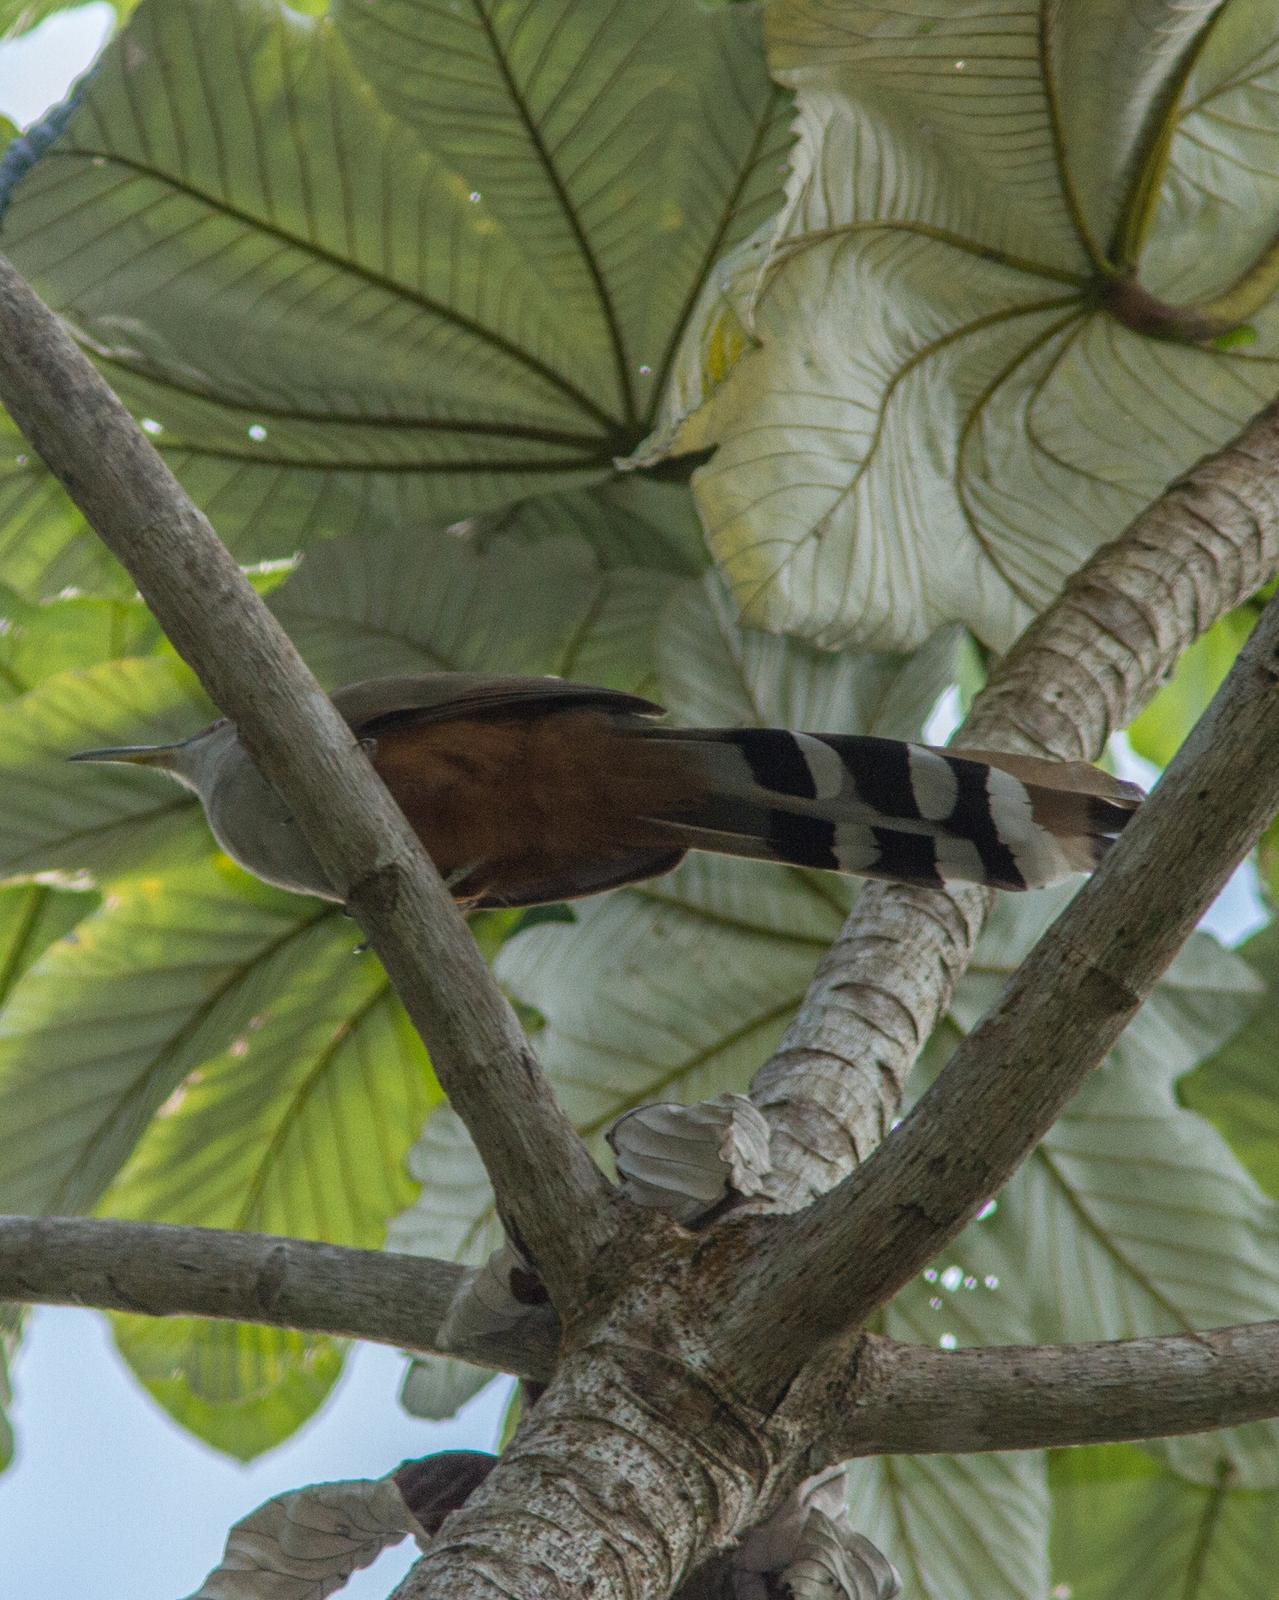 Puerto Rican Lizard-Cuckoo Photo by Dan Irizarry